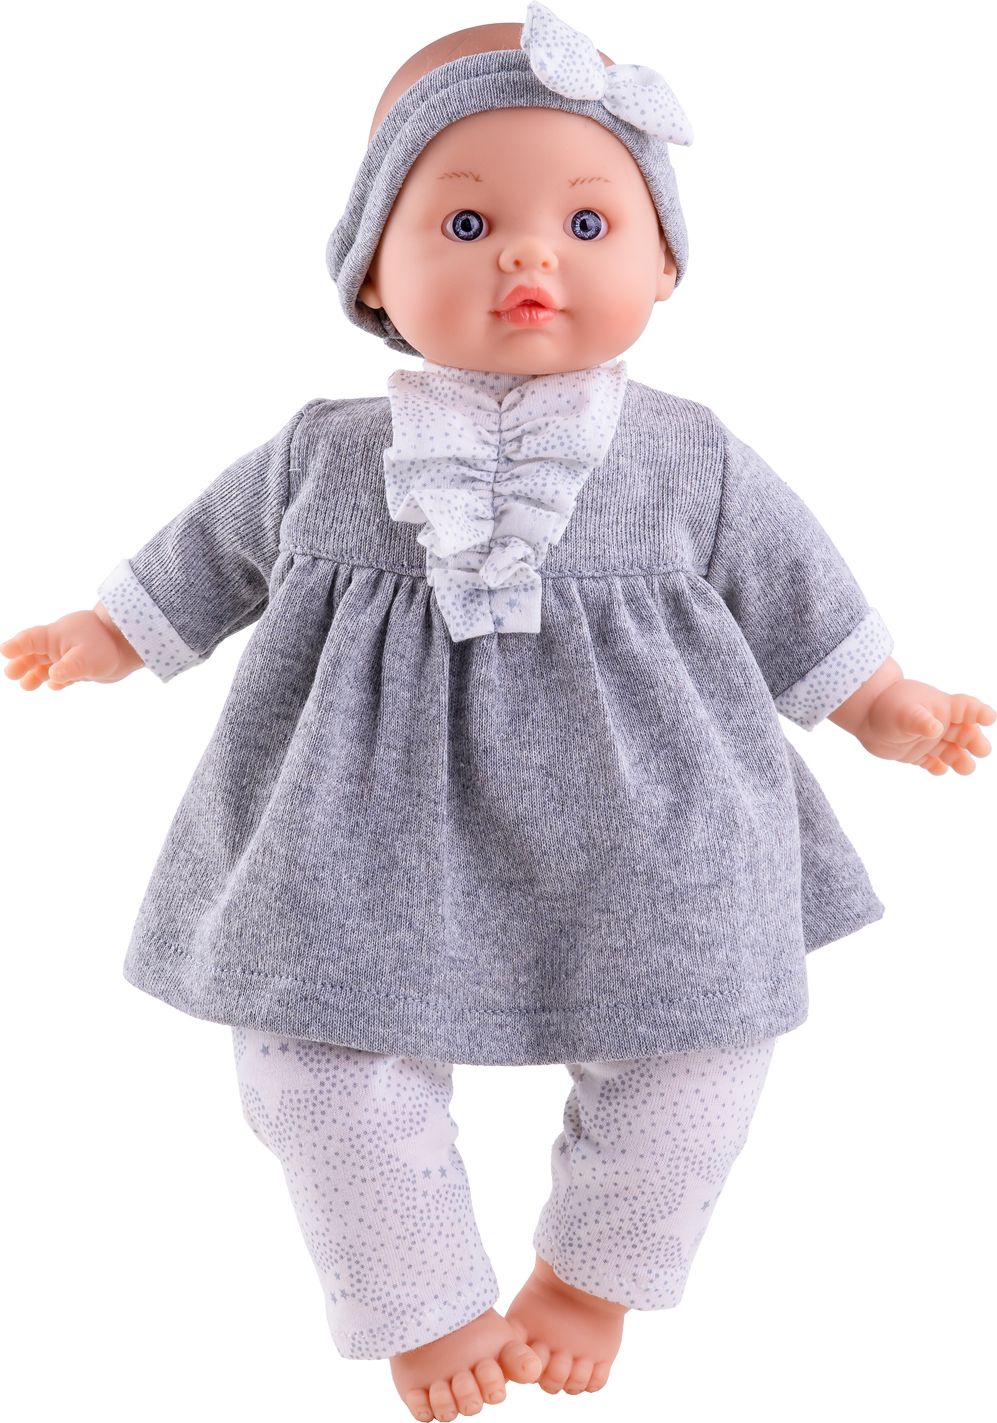 Realistické miminko - holčička  Bea od firmy Paola Reina - obrázek 1